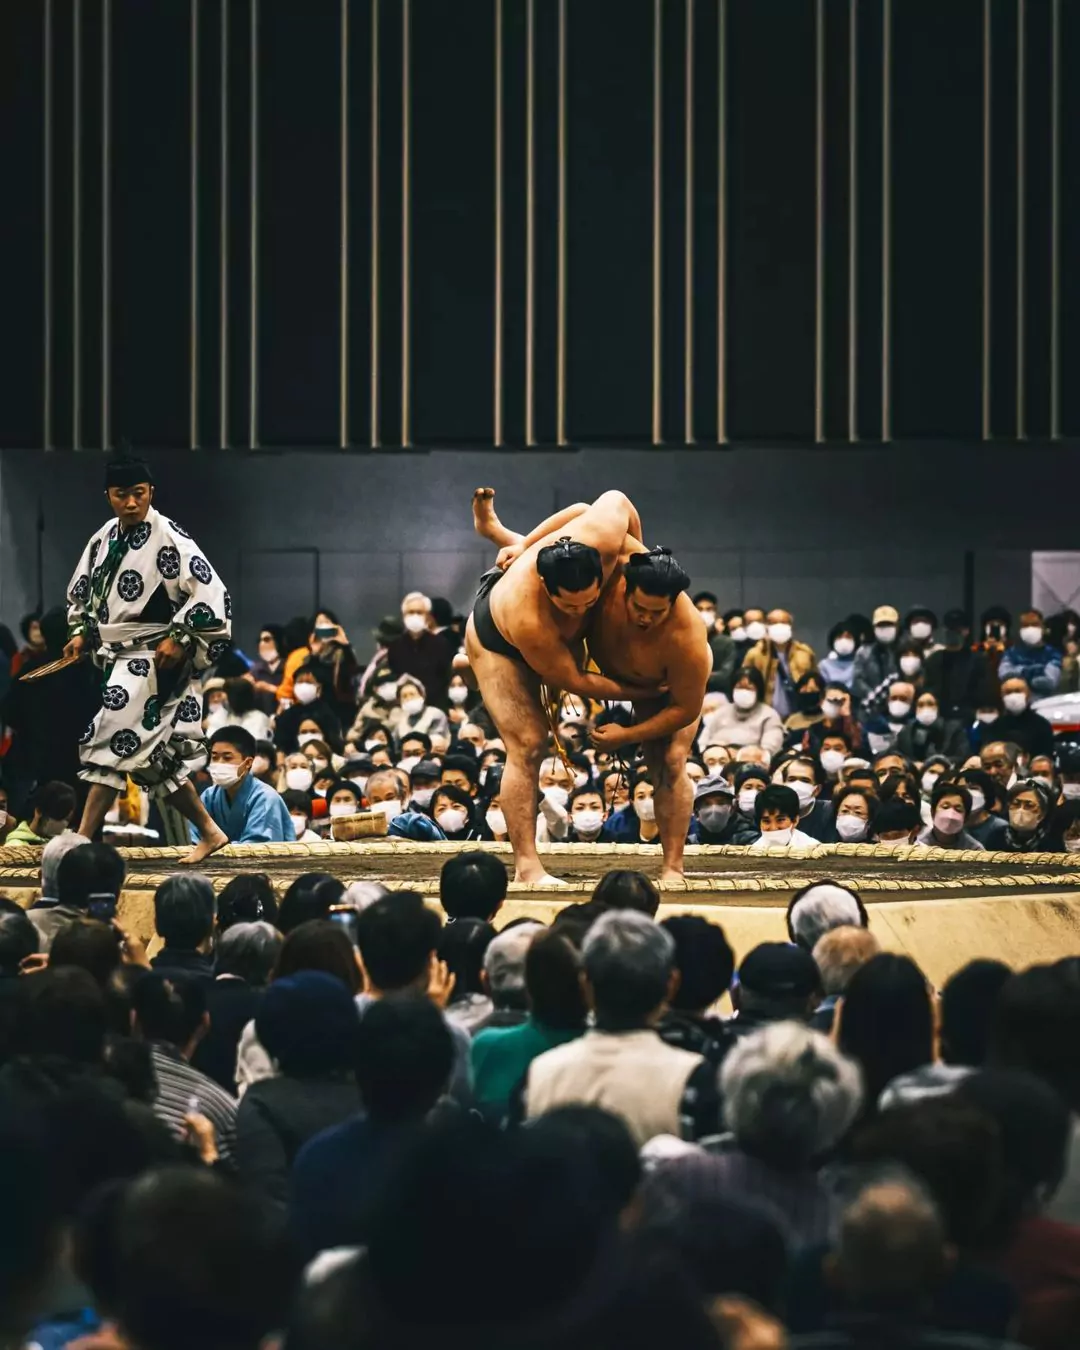 Attend a Sumo Match